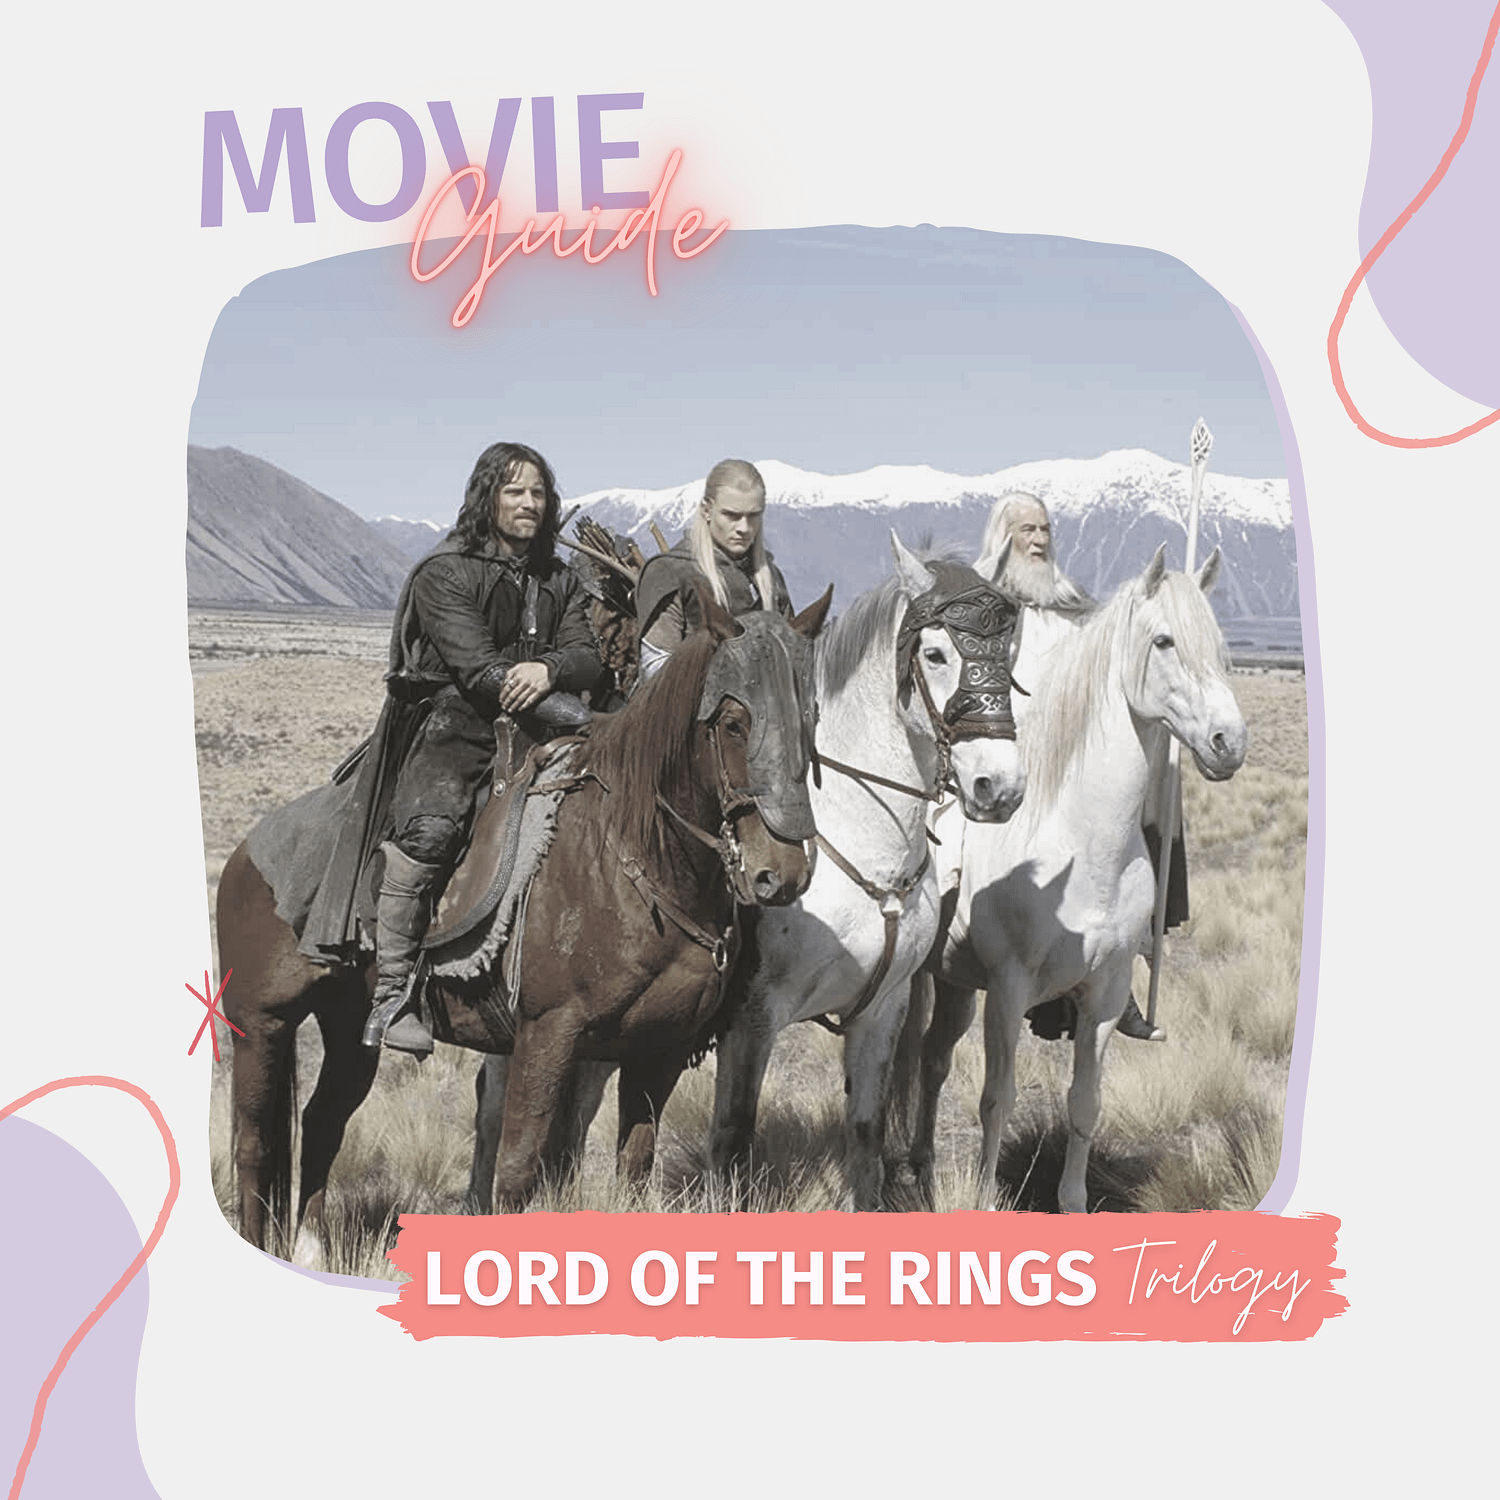 Lord of the Rings series: Viggo Mortensen, Orlando Bloom, Ian McKellen on horses. (Left to right)